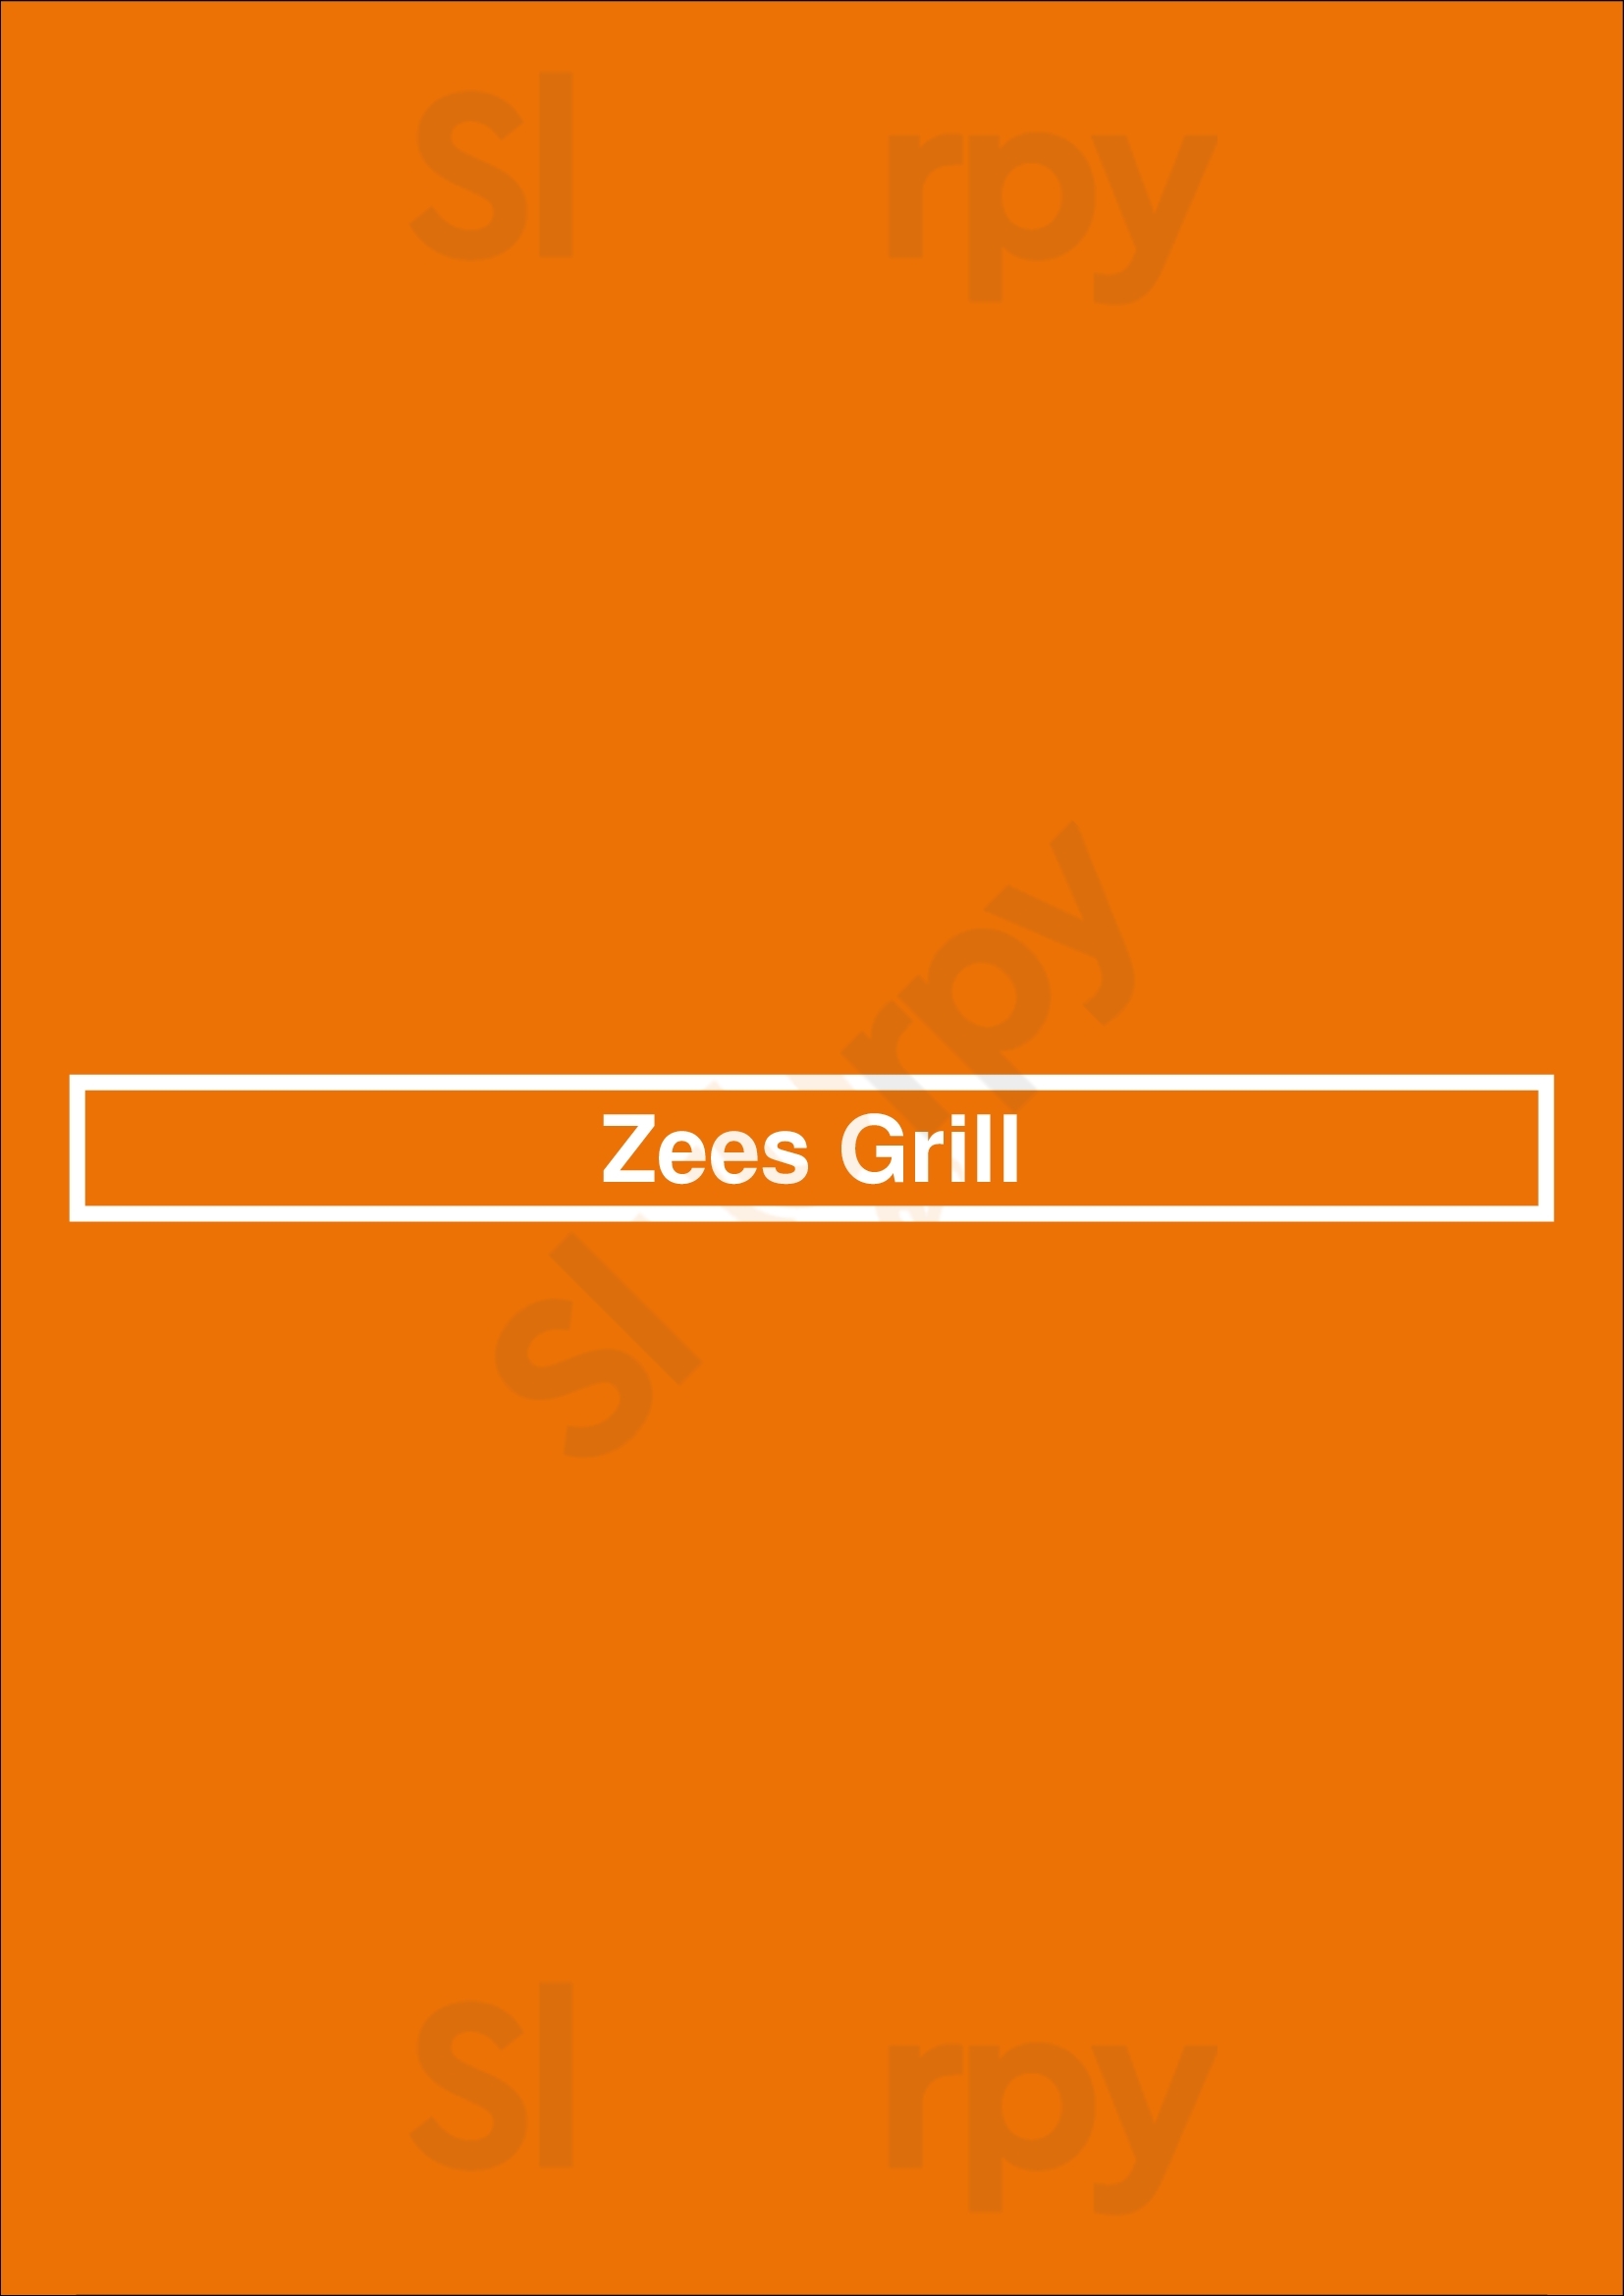 Zees Grill Niagara-on-the-Lake Menu - 1